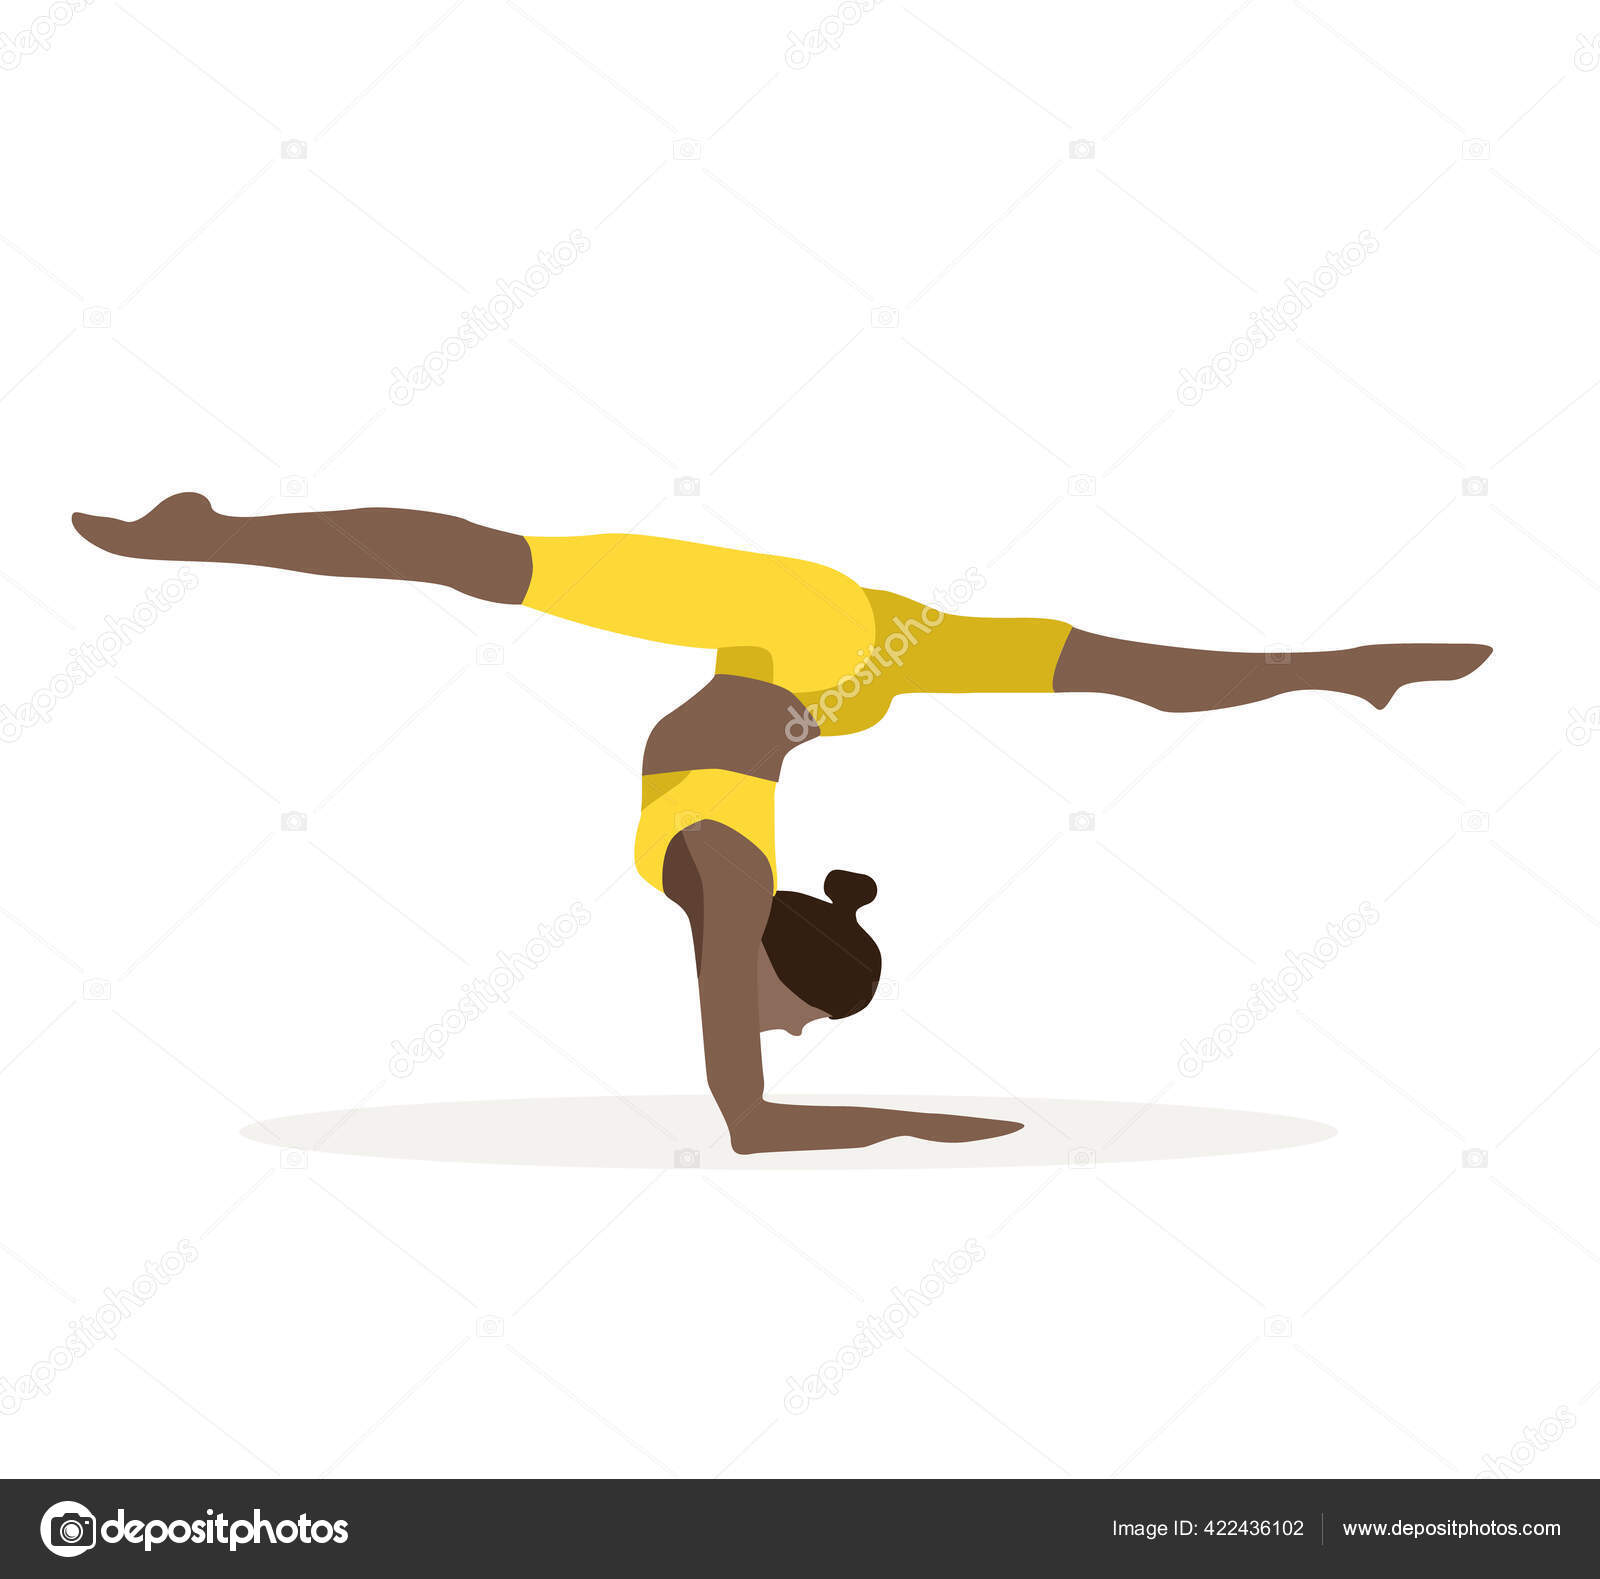 https://st2.depositphotos.com/16270464/42243/v/1600/depositphotos_422436102-stock-illustration-set-sports-exercises-gymnastic-elements.jpg